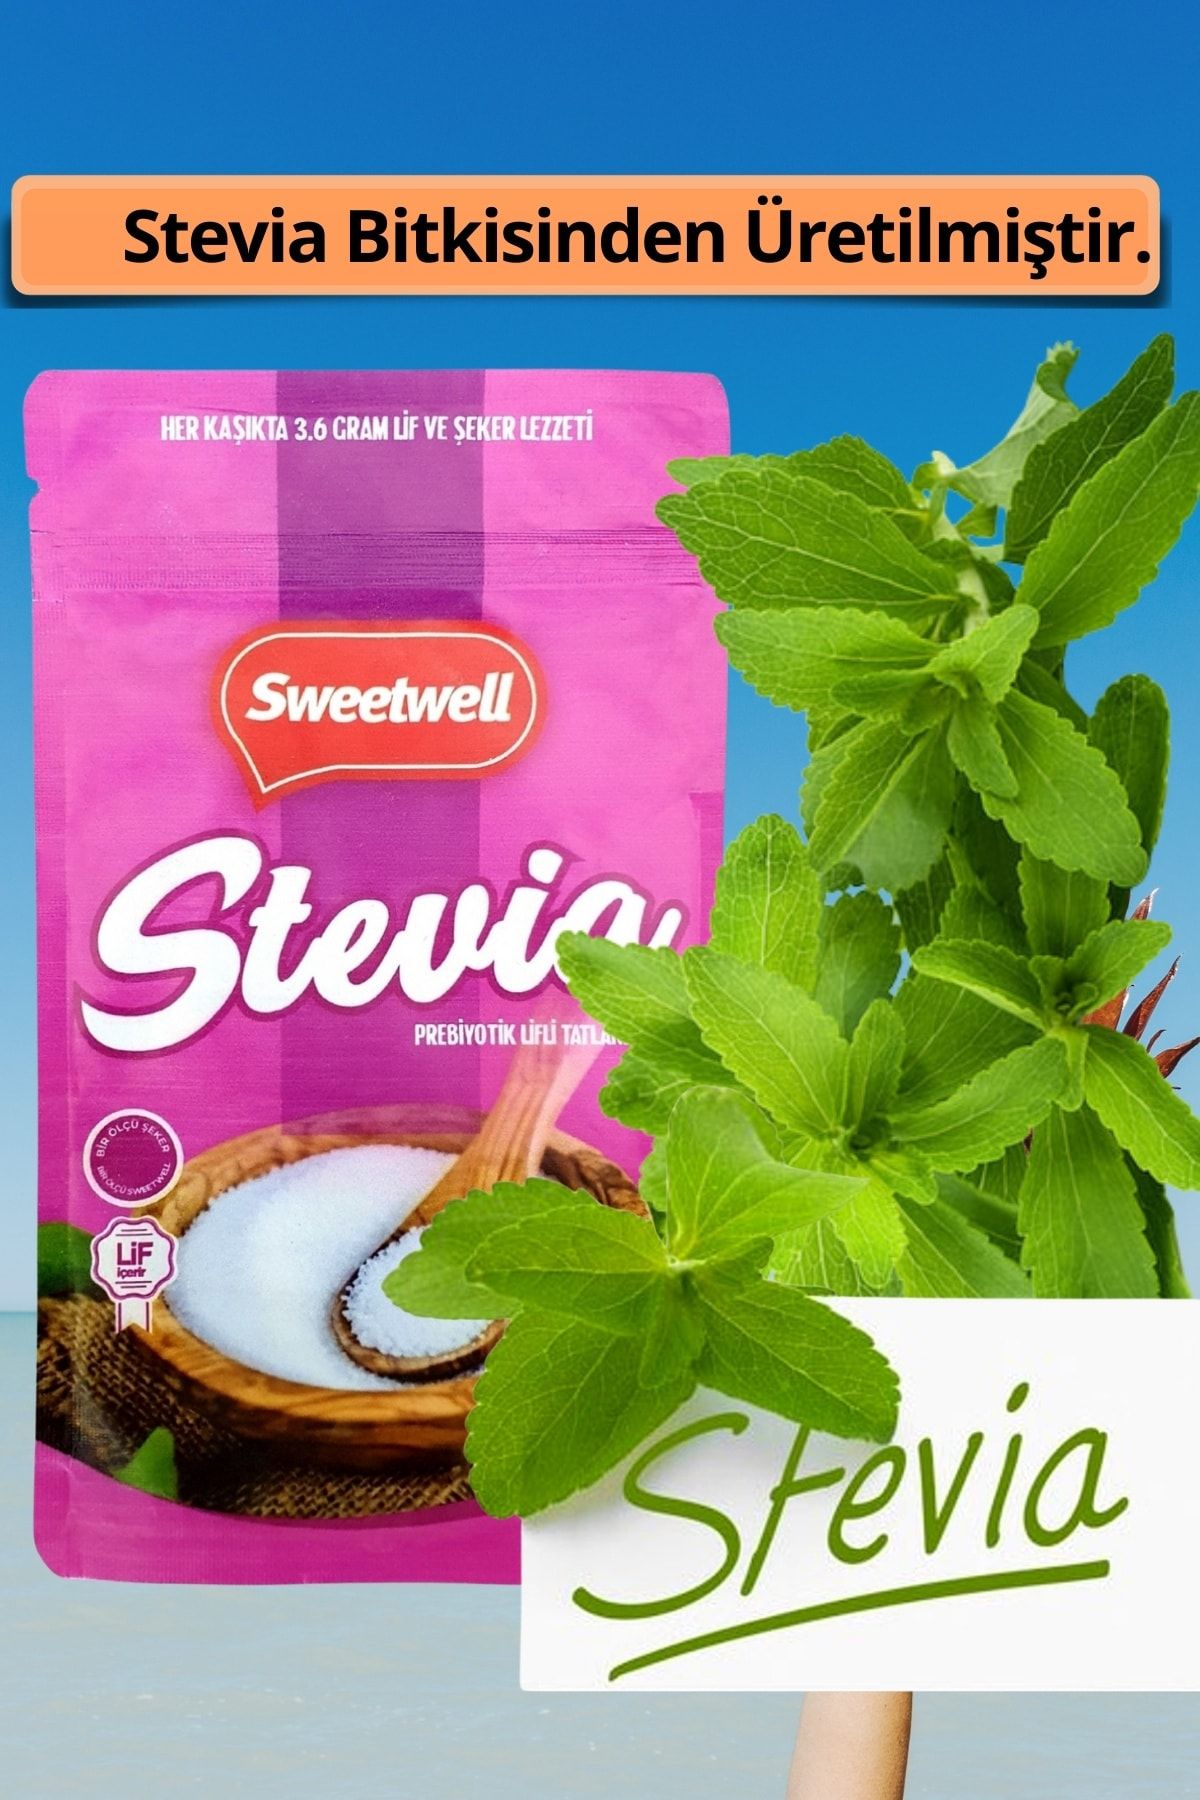 Sweetwell Stevia Prebiyotik Lifli Toz Sofralık Tatlandırıcı 500 Gr